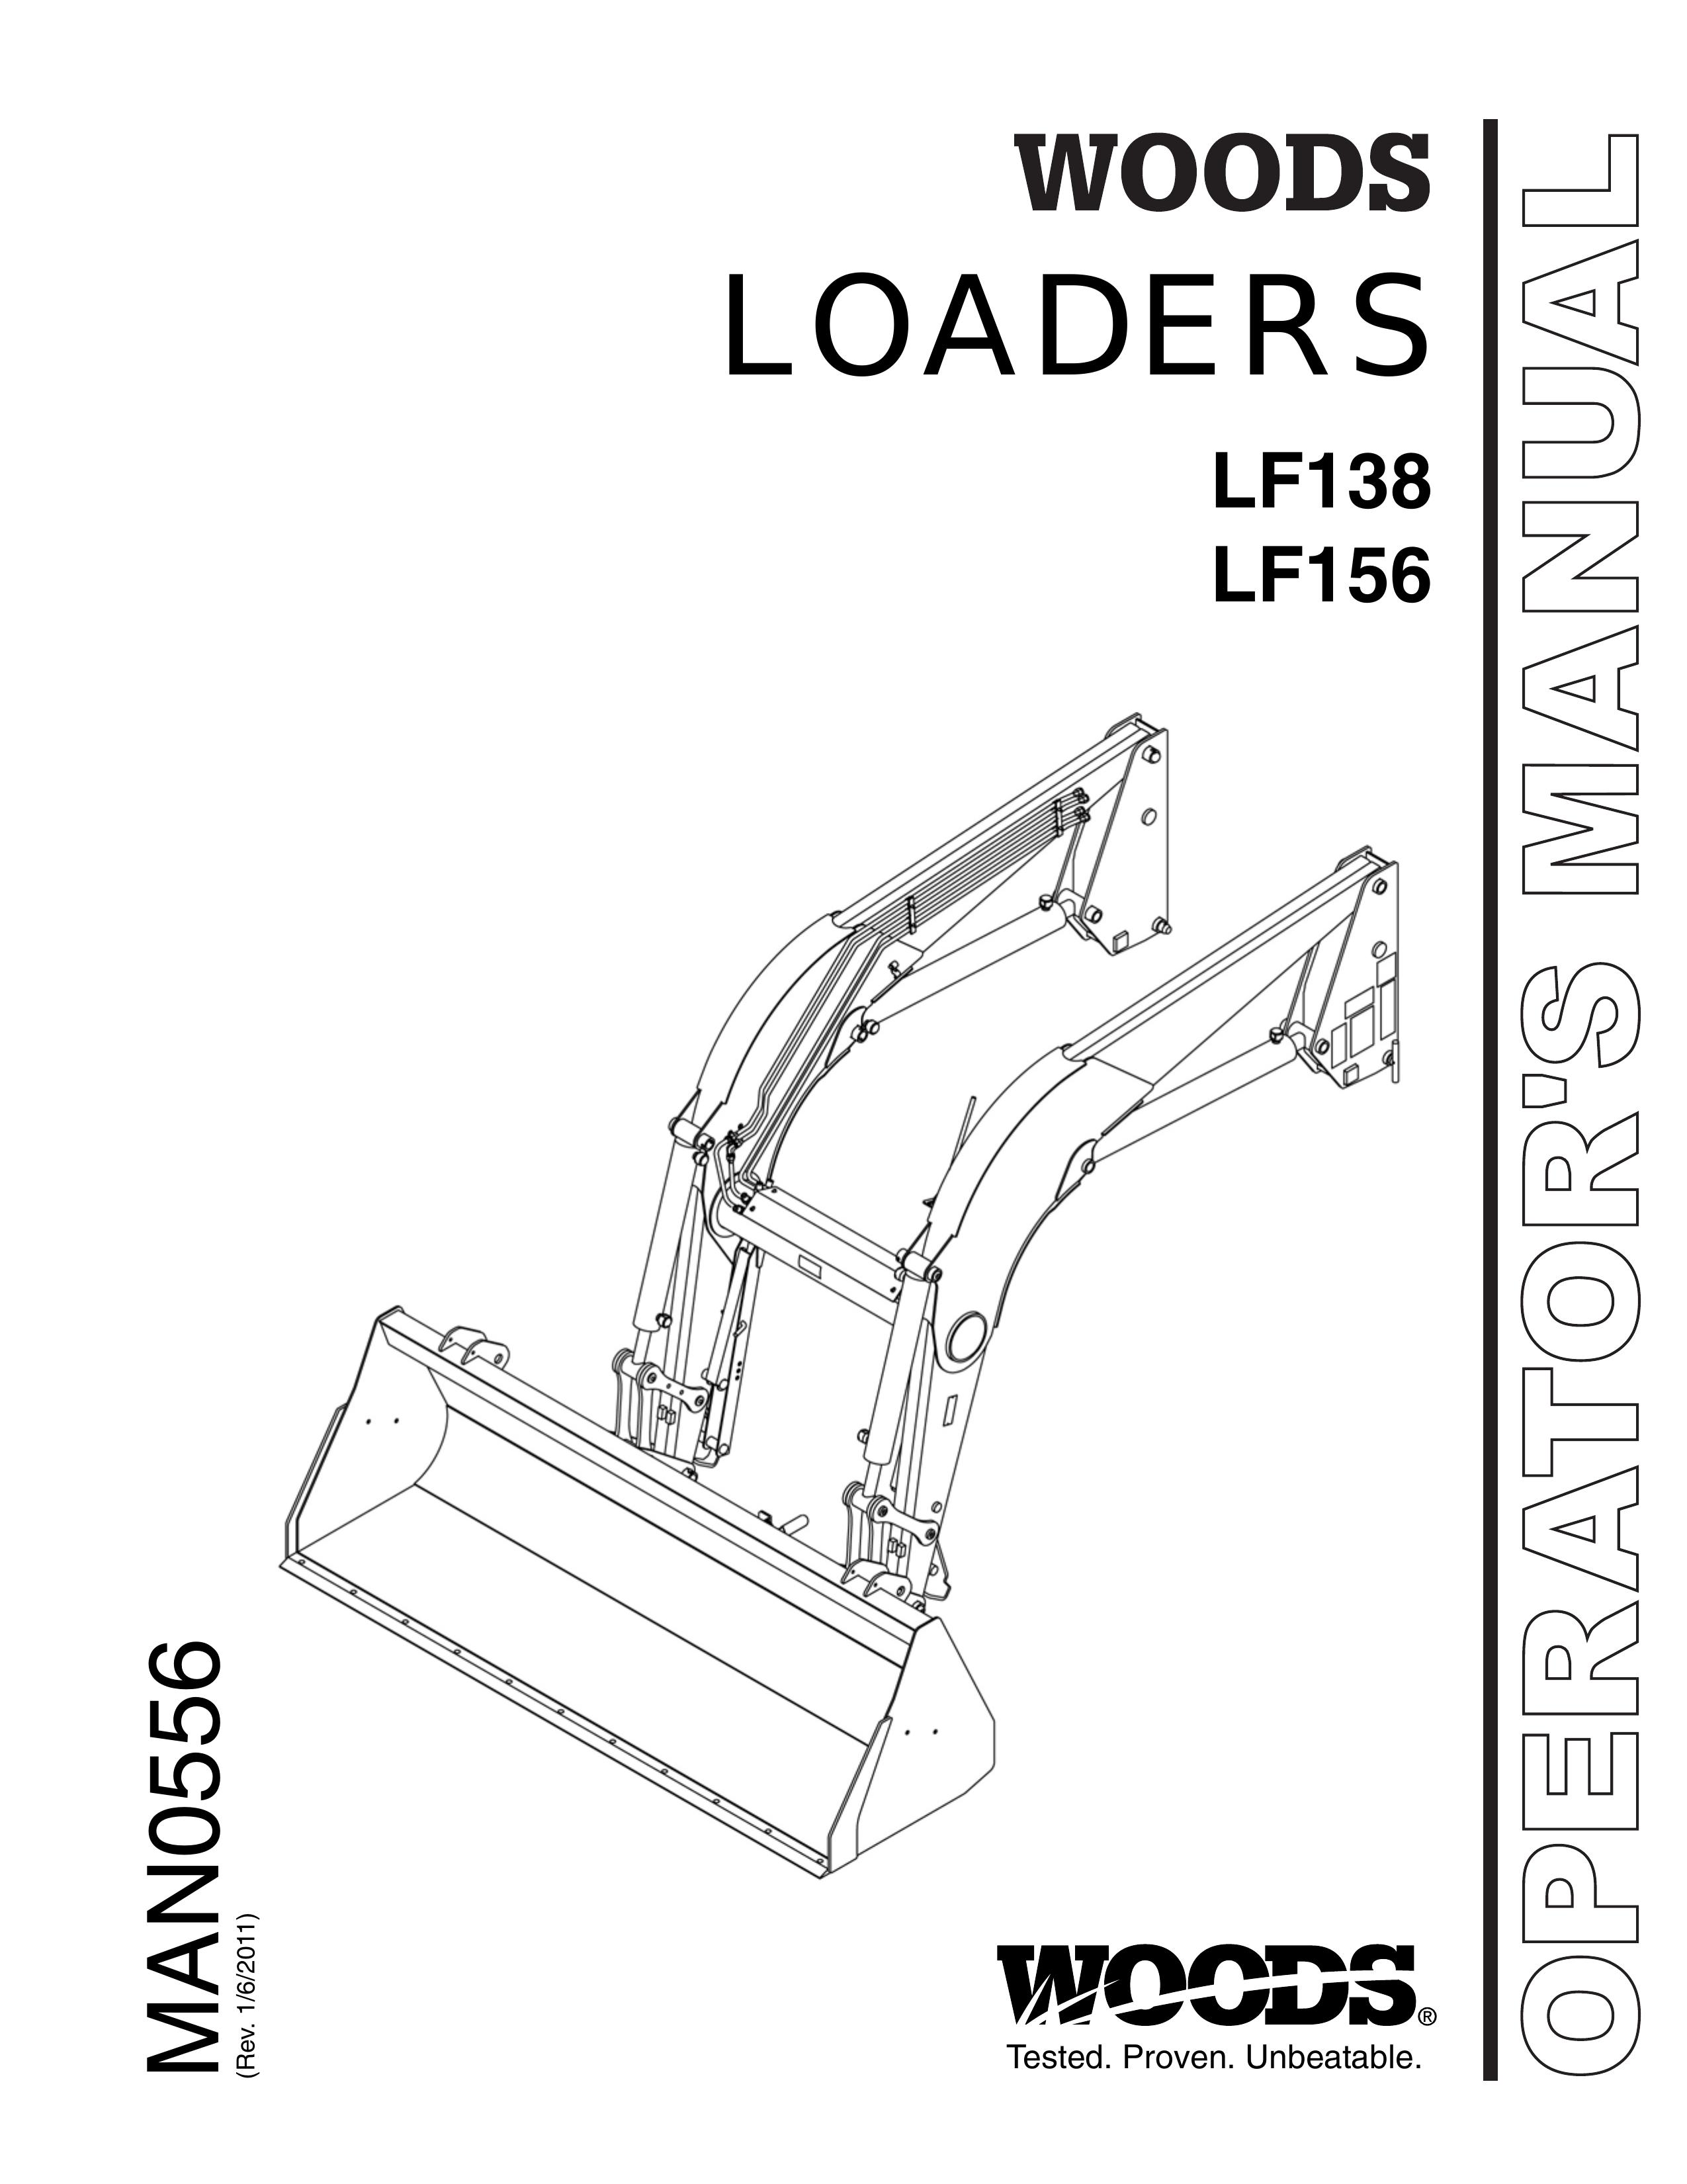 Woods Equipment LF156 Compact Loader User Manual